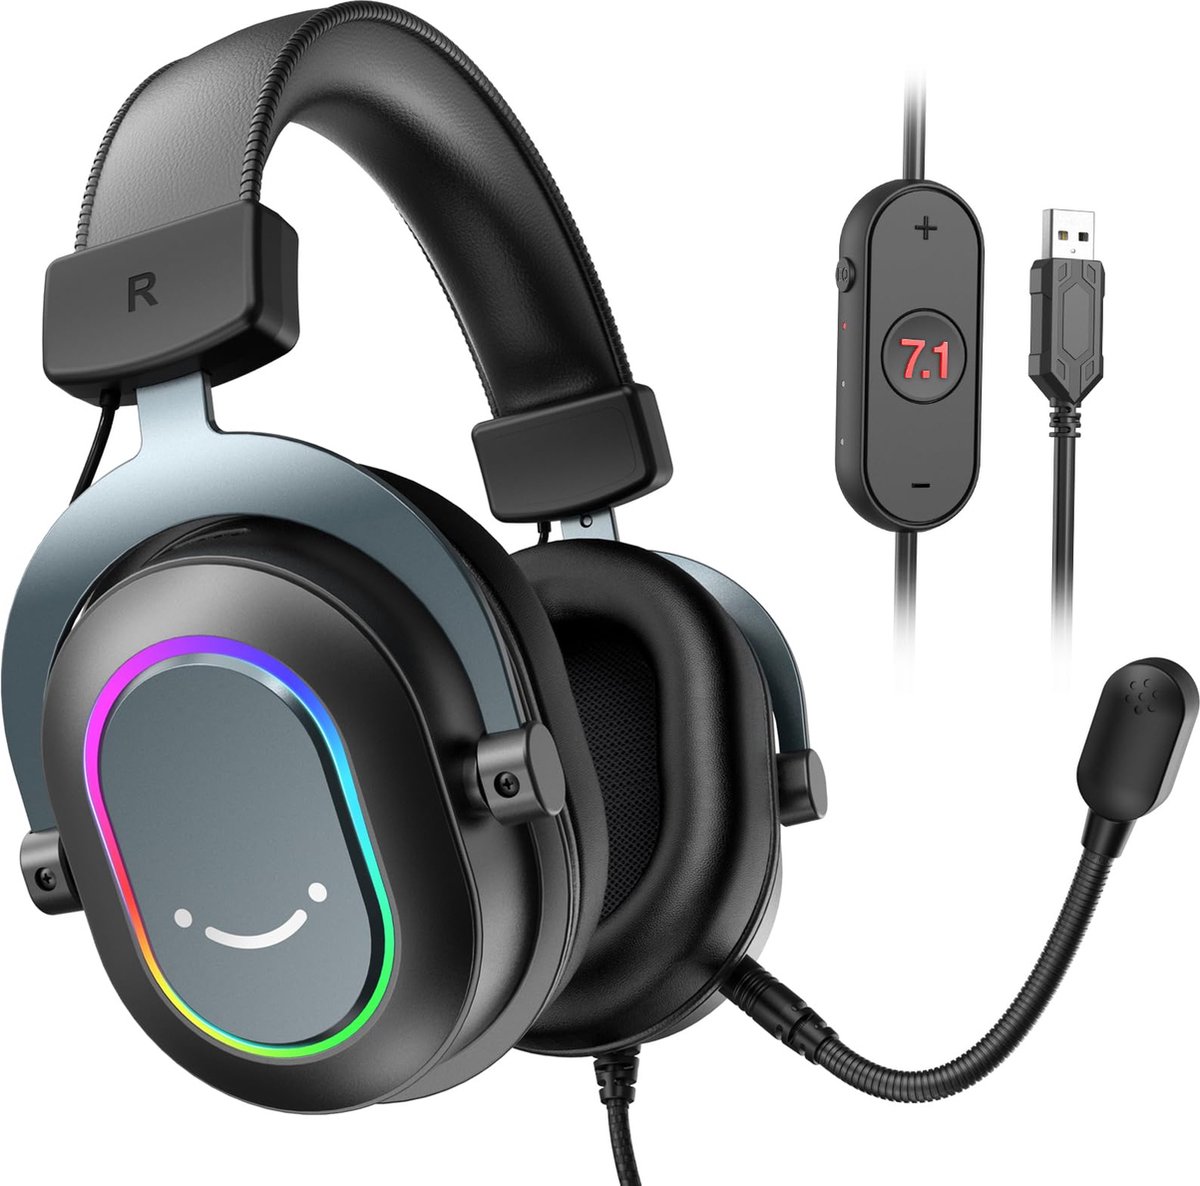 Beroli - FIFINE Gaming Headset met Microfoon - Over-Ear Hoofdtelefoon - USB Headset - PC, PS4, PS5 - RGB Hoofdtelefoon - 3 EQ-Modi - Surround Sound - Oorkussens - H6